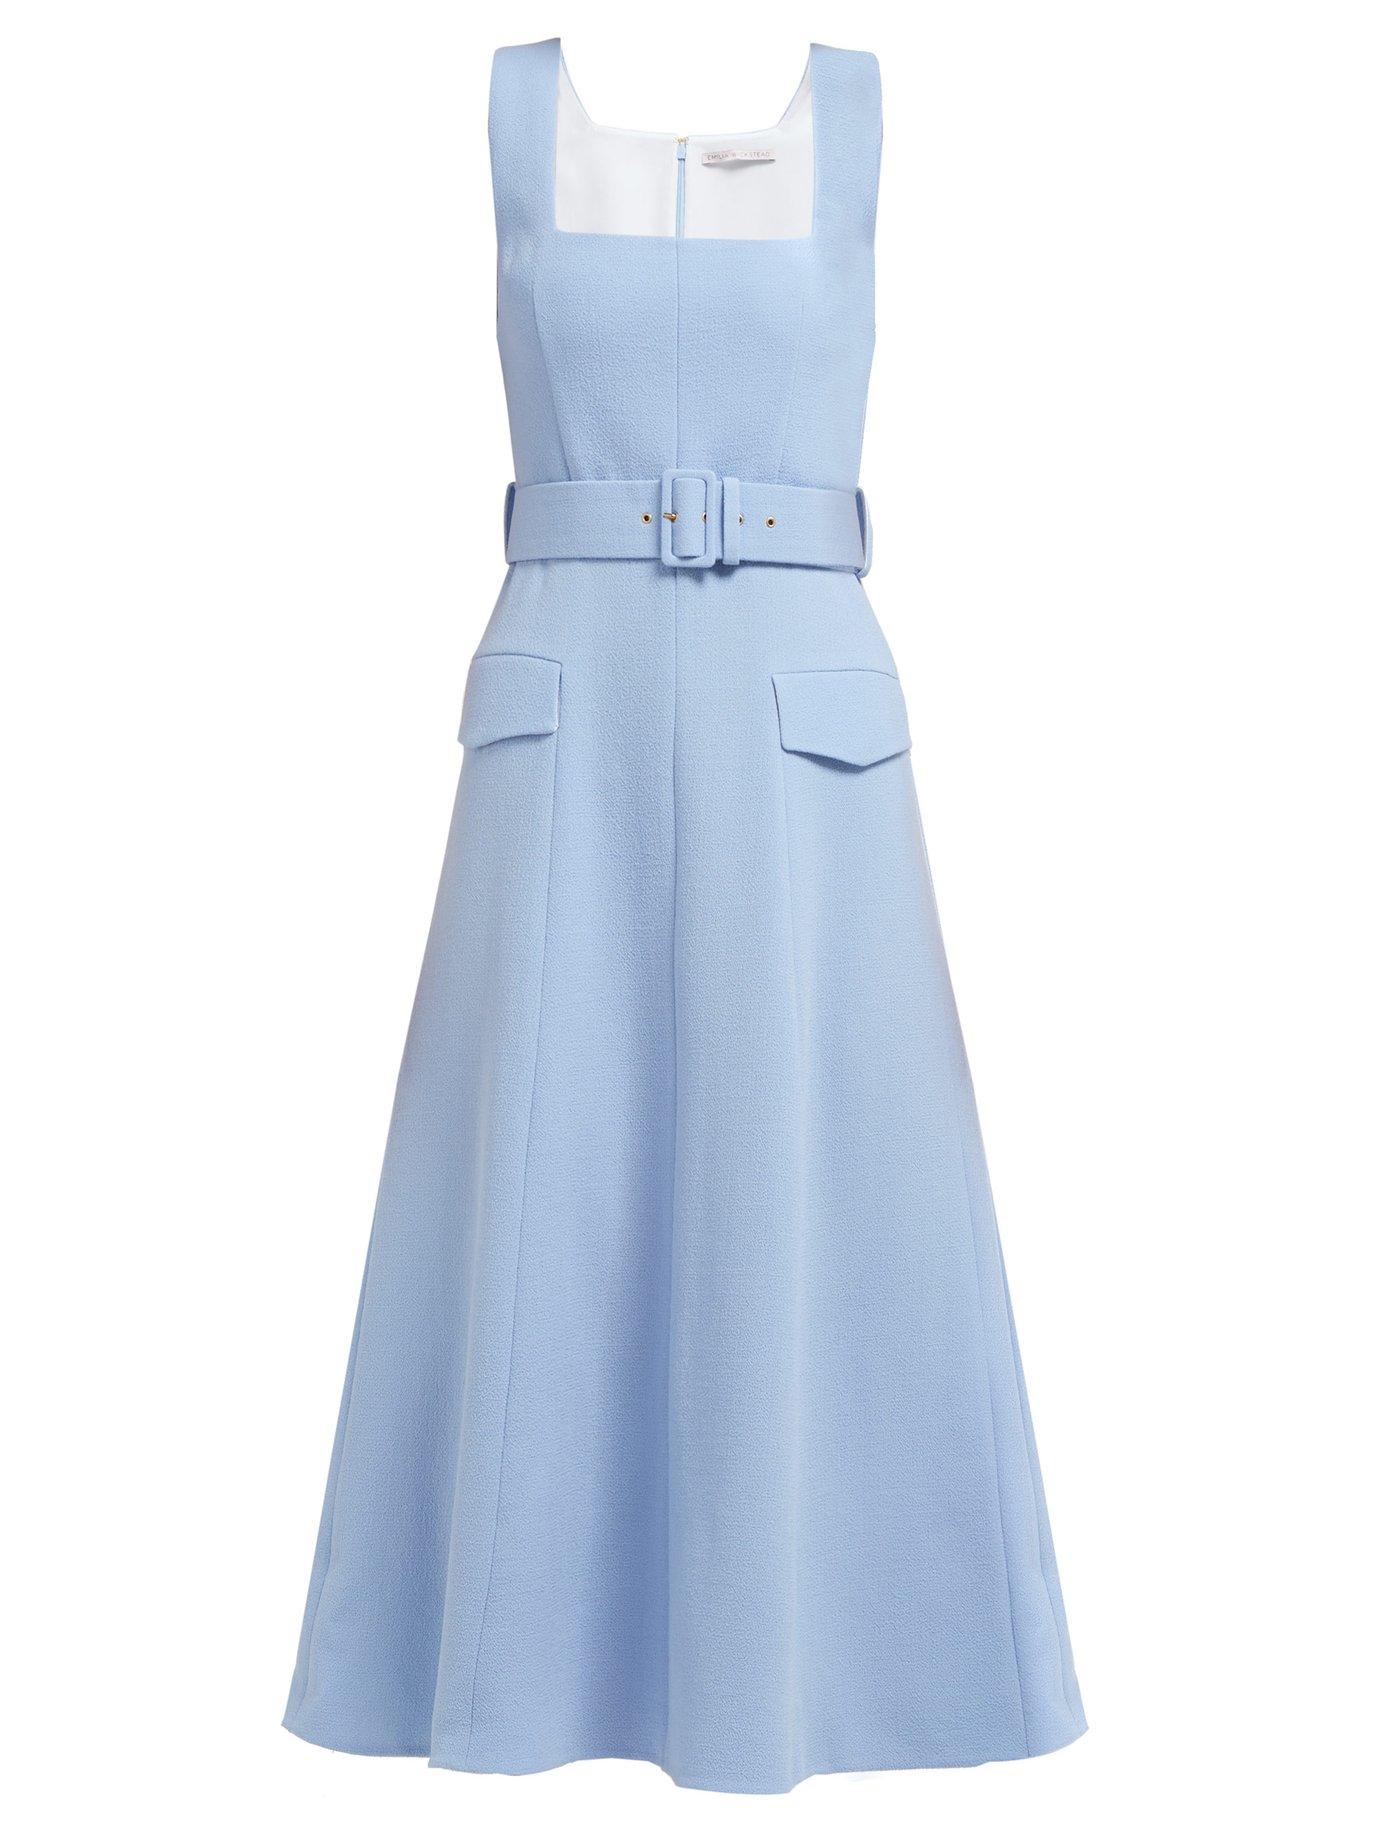 Emilia Wickstead Petra Panelled Wool Crepe Dress in Blue - Lyst